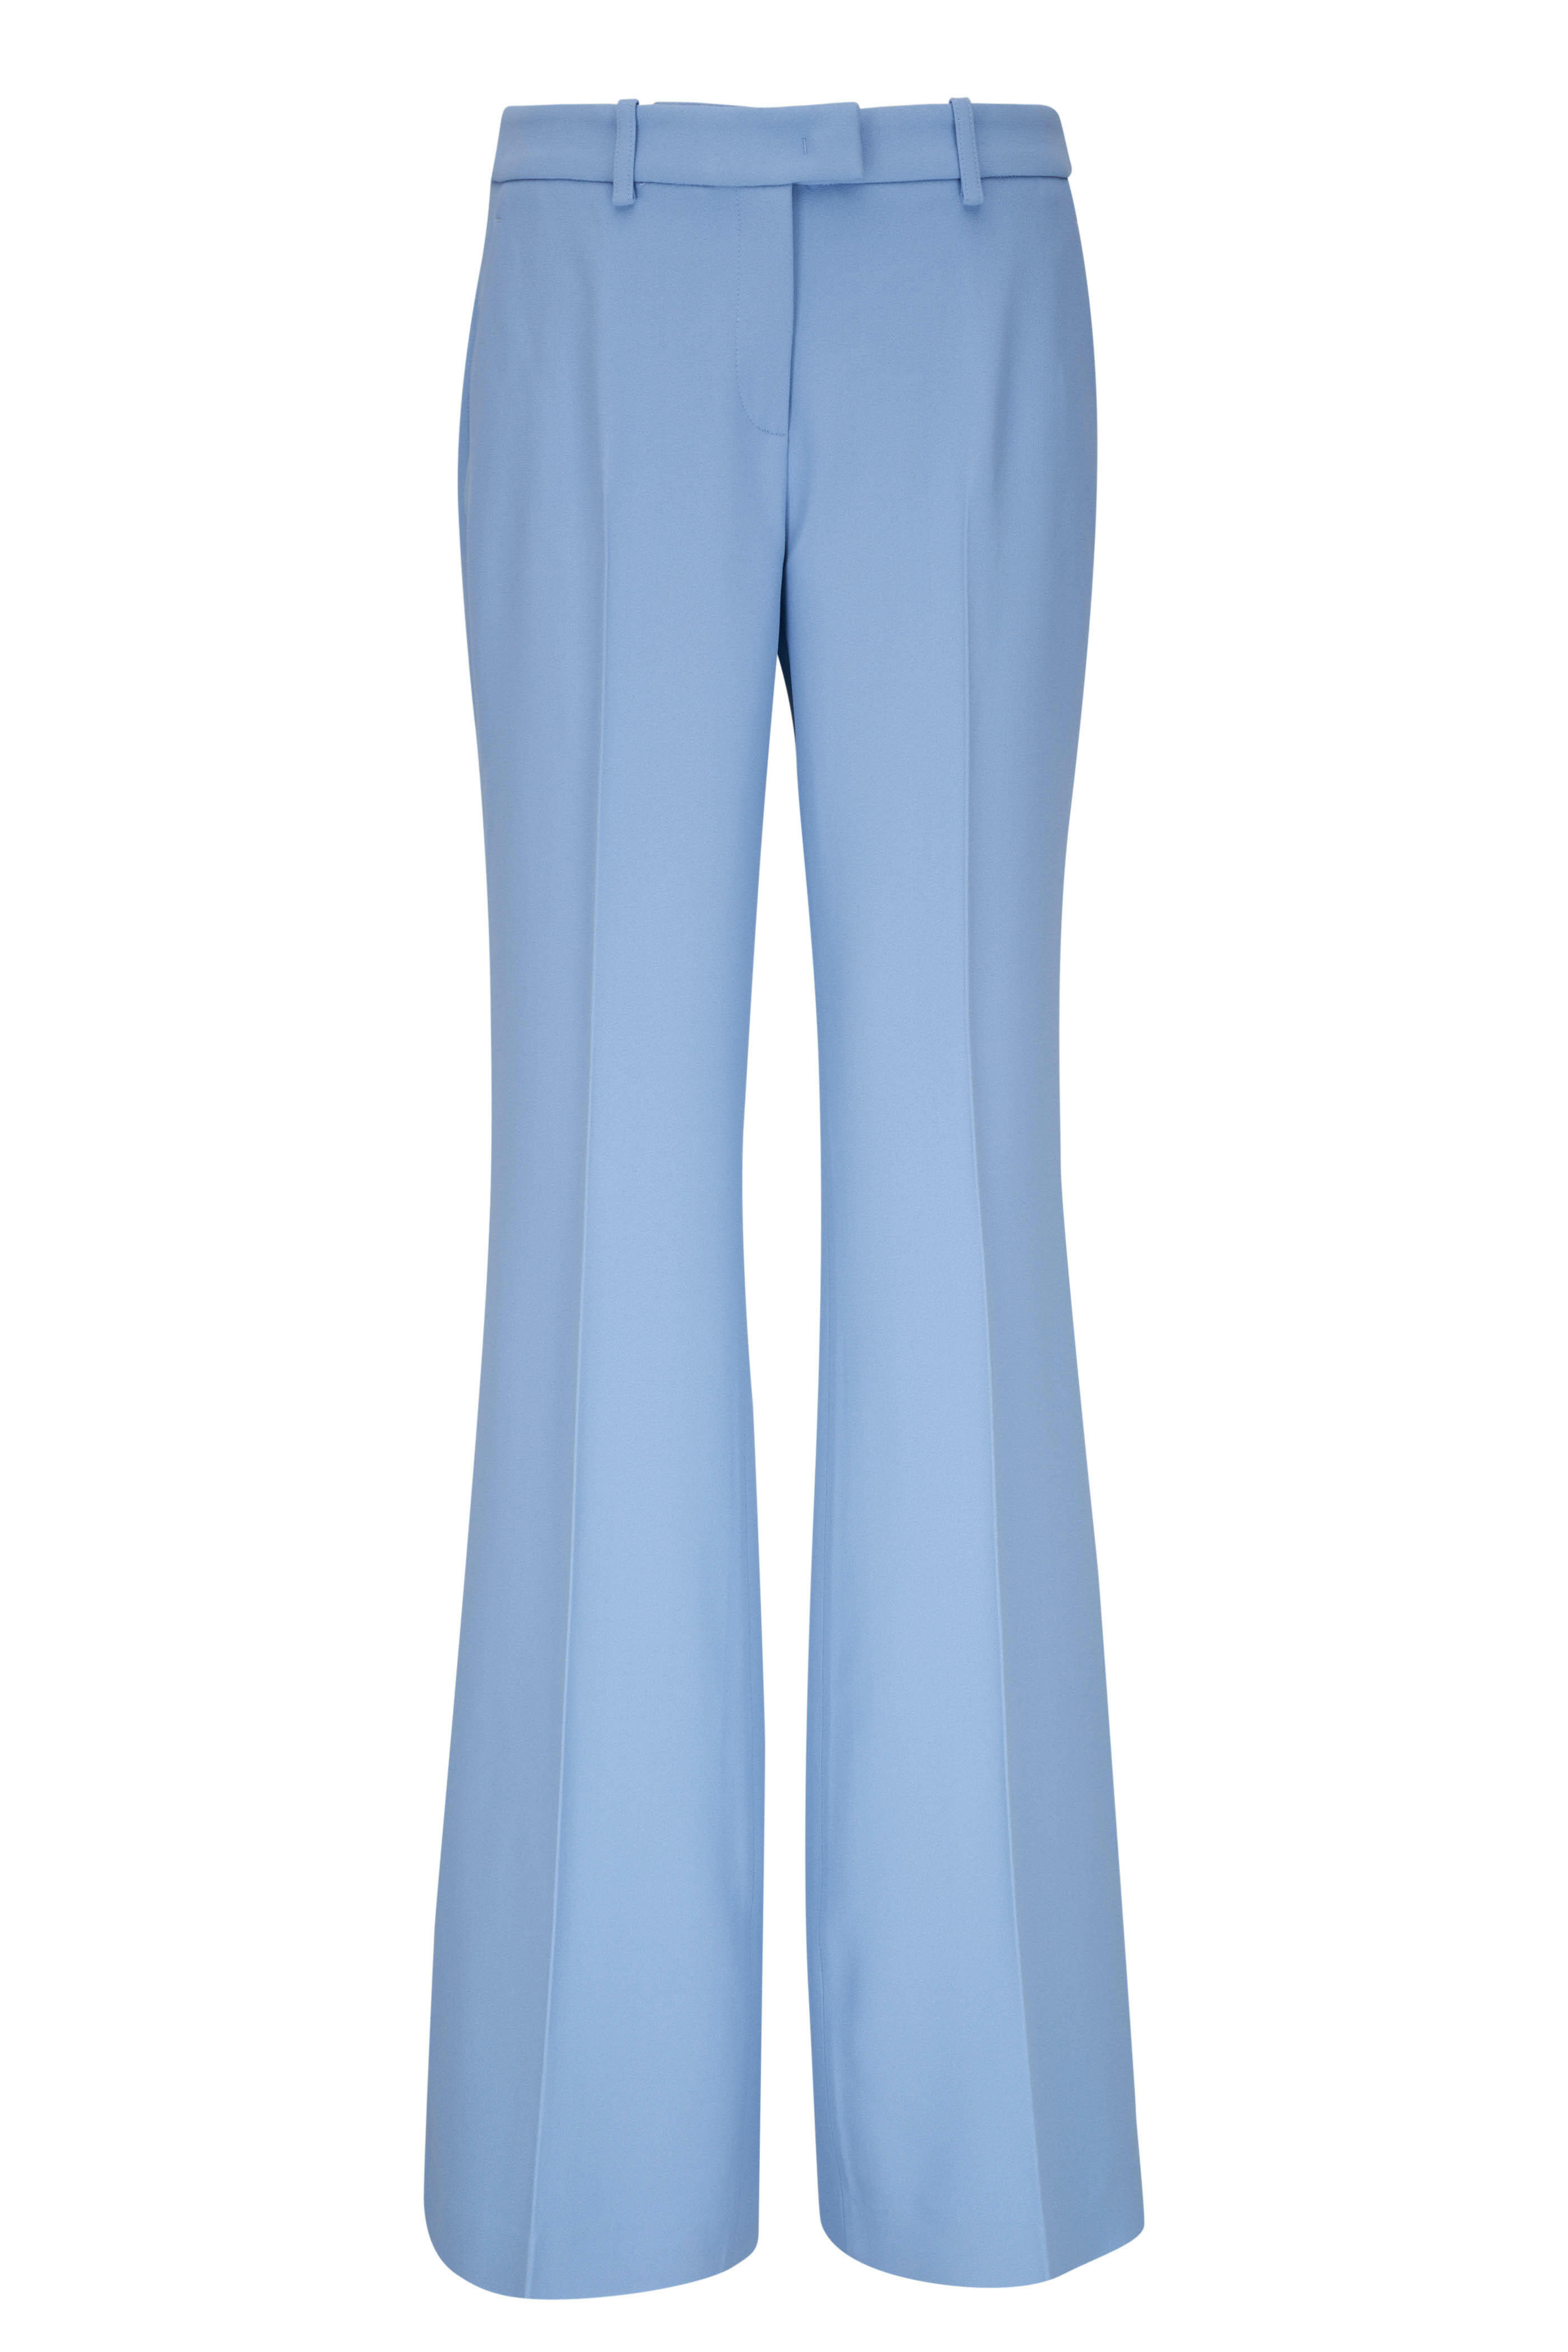 Pleated navy blue pant, Michael Michael Kors